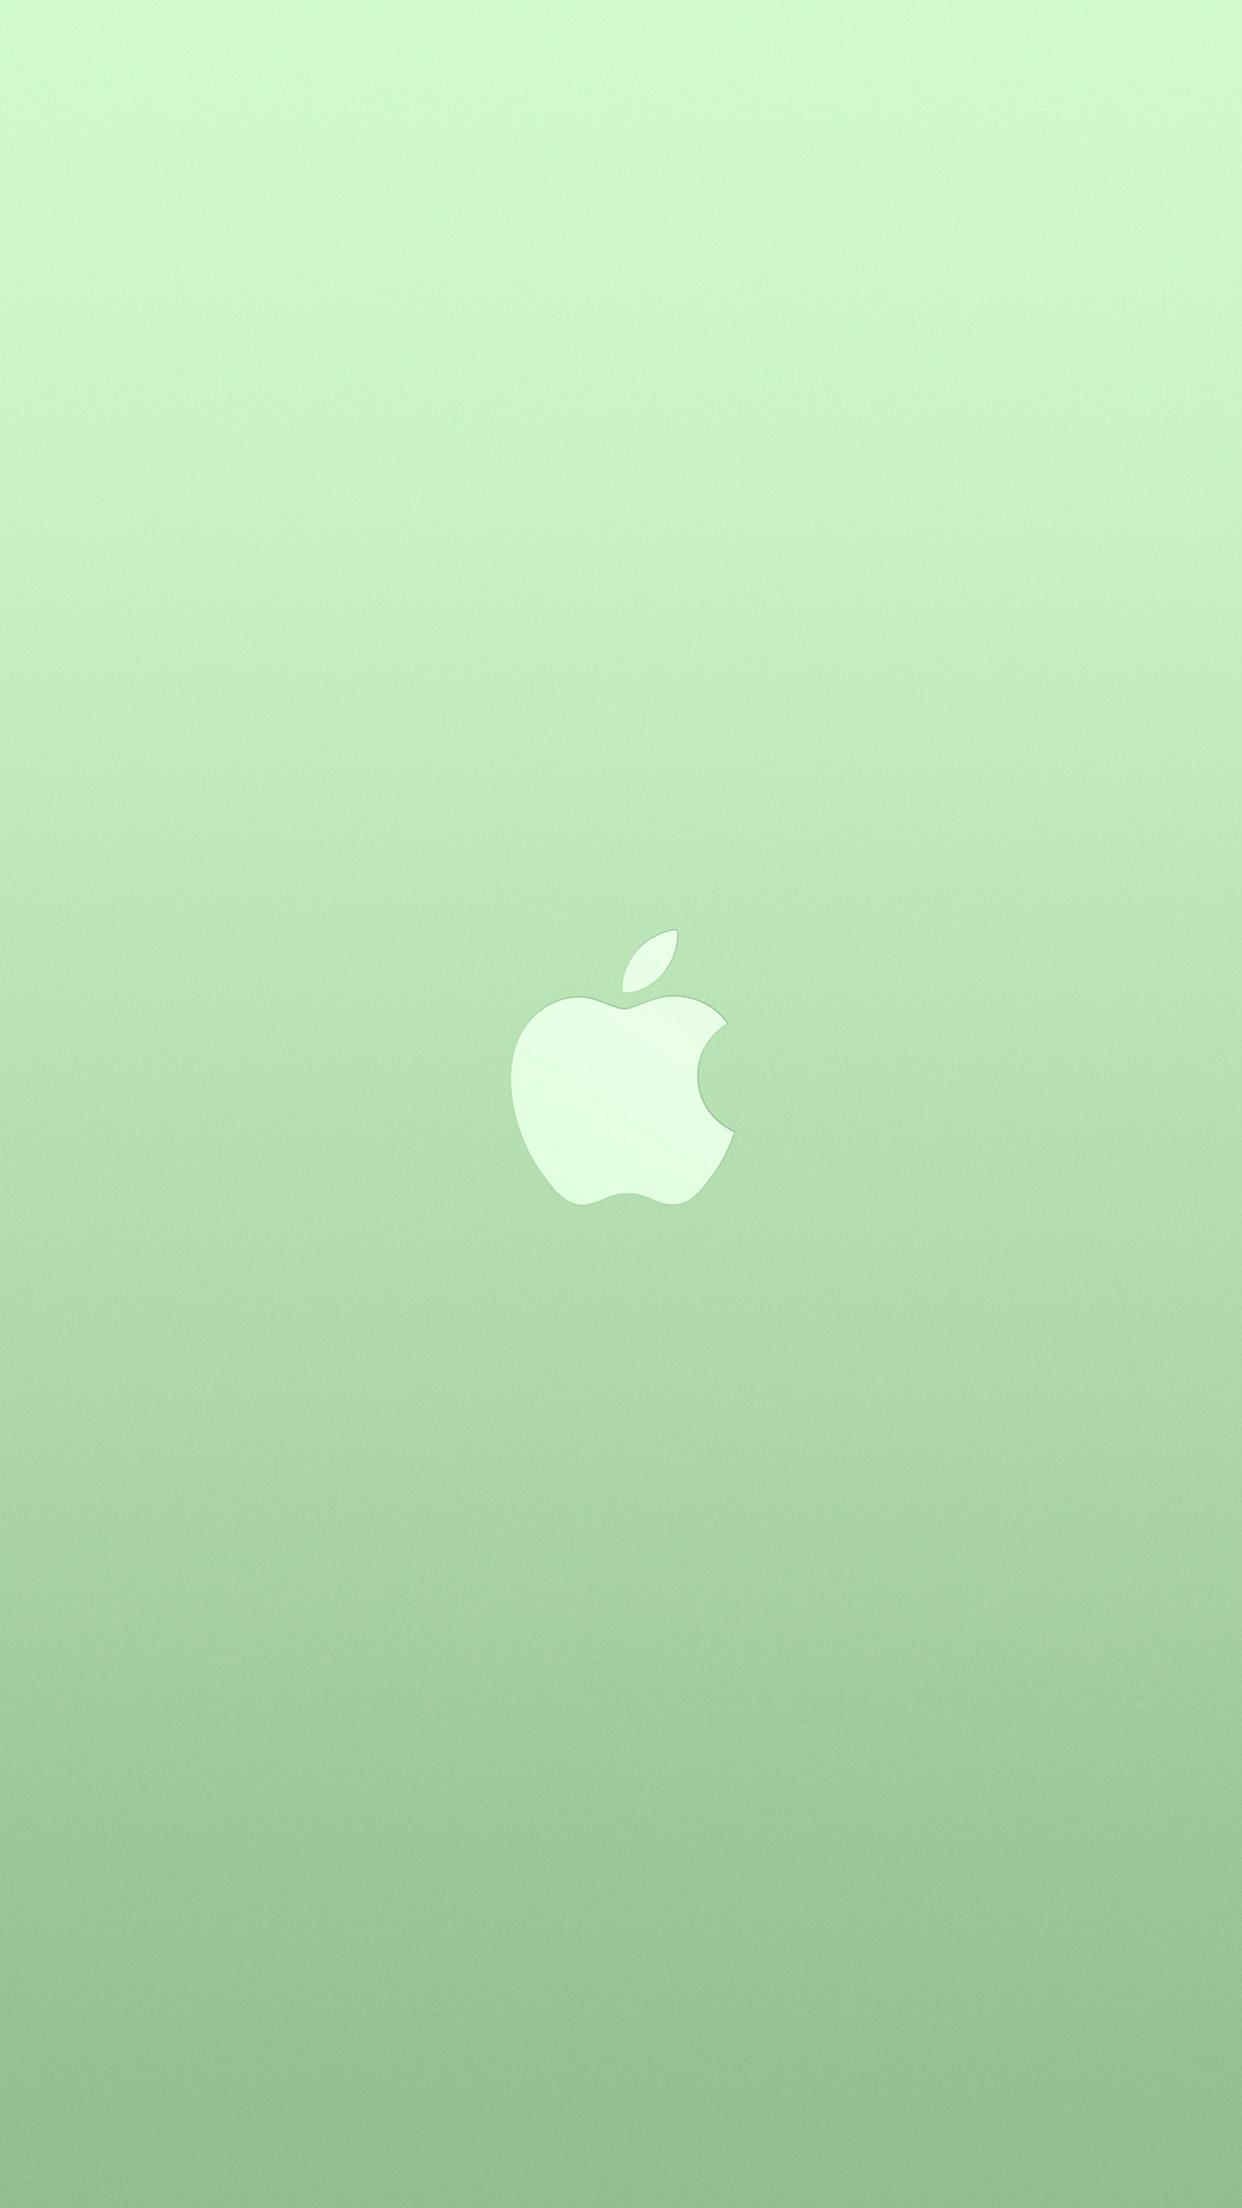 iPhone7 wallpaper. logo apple